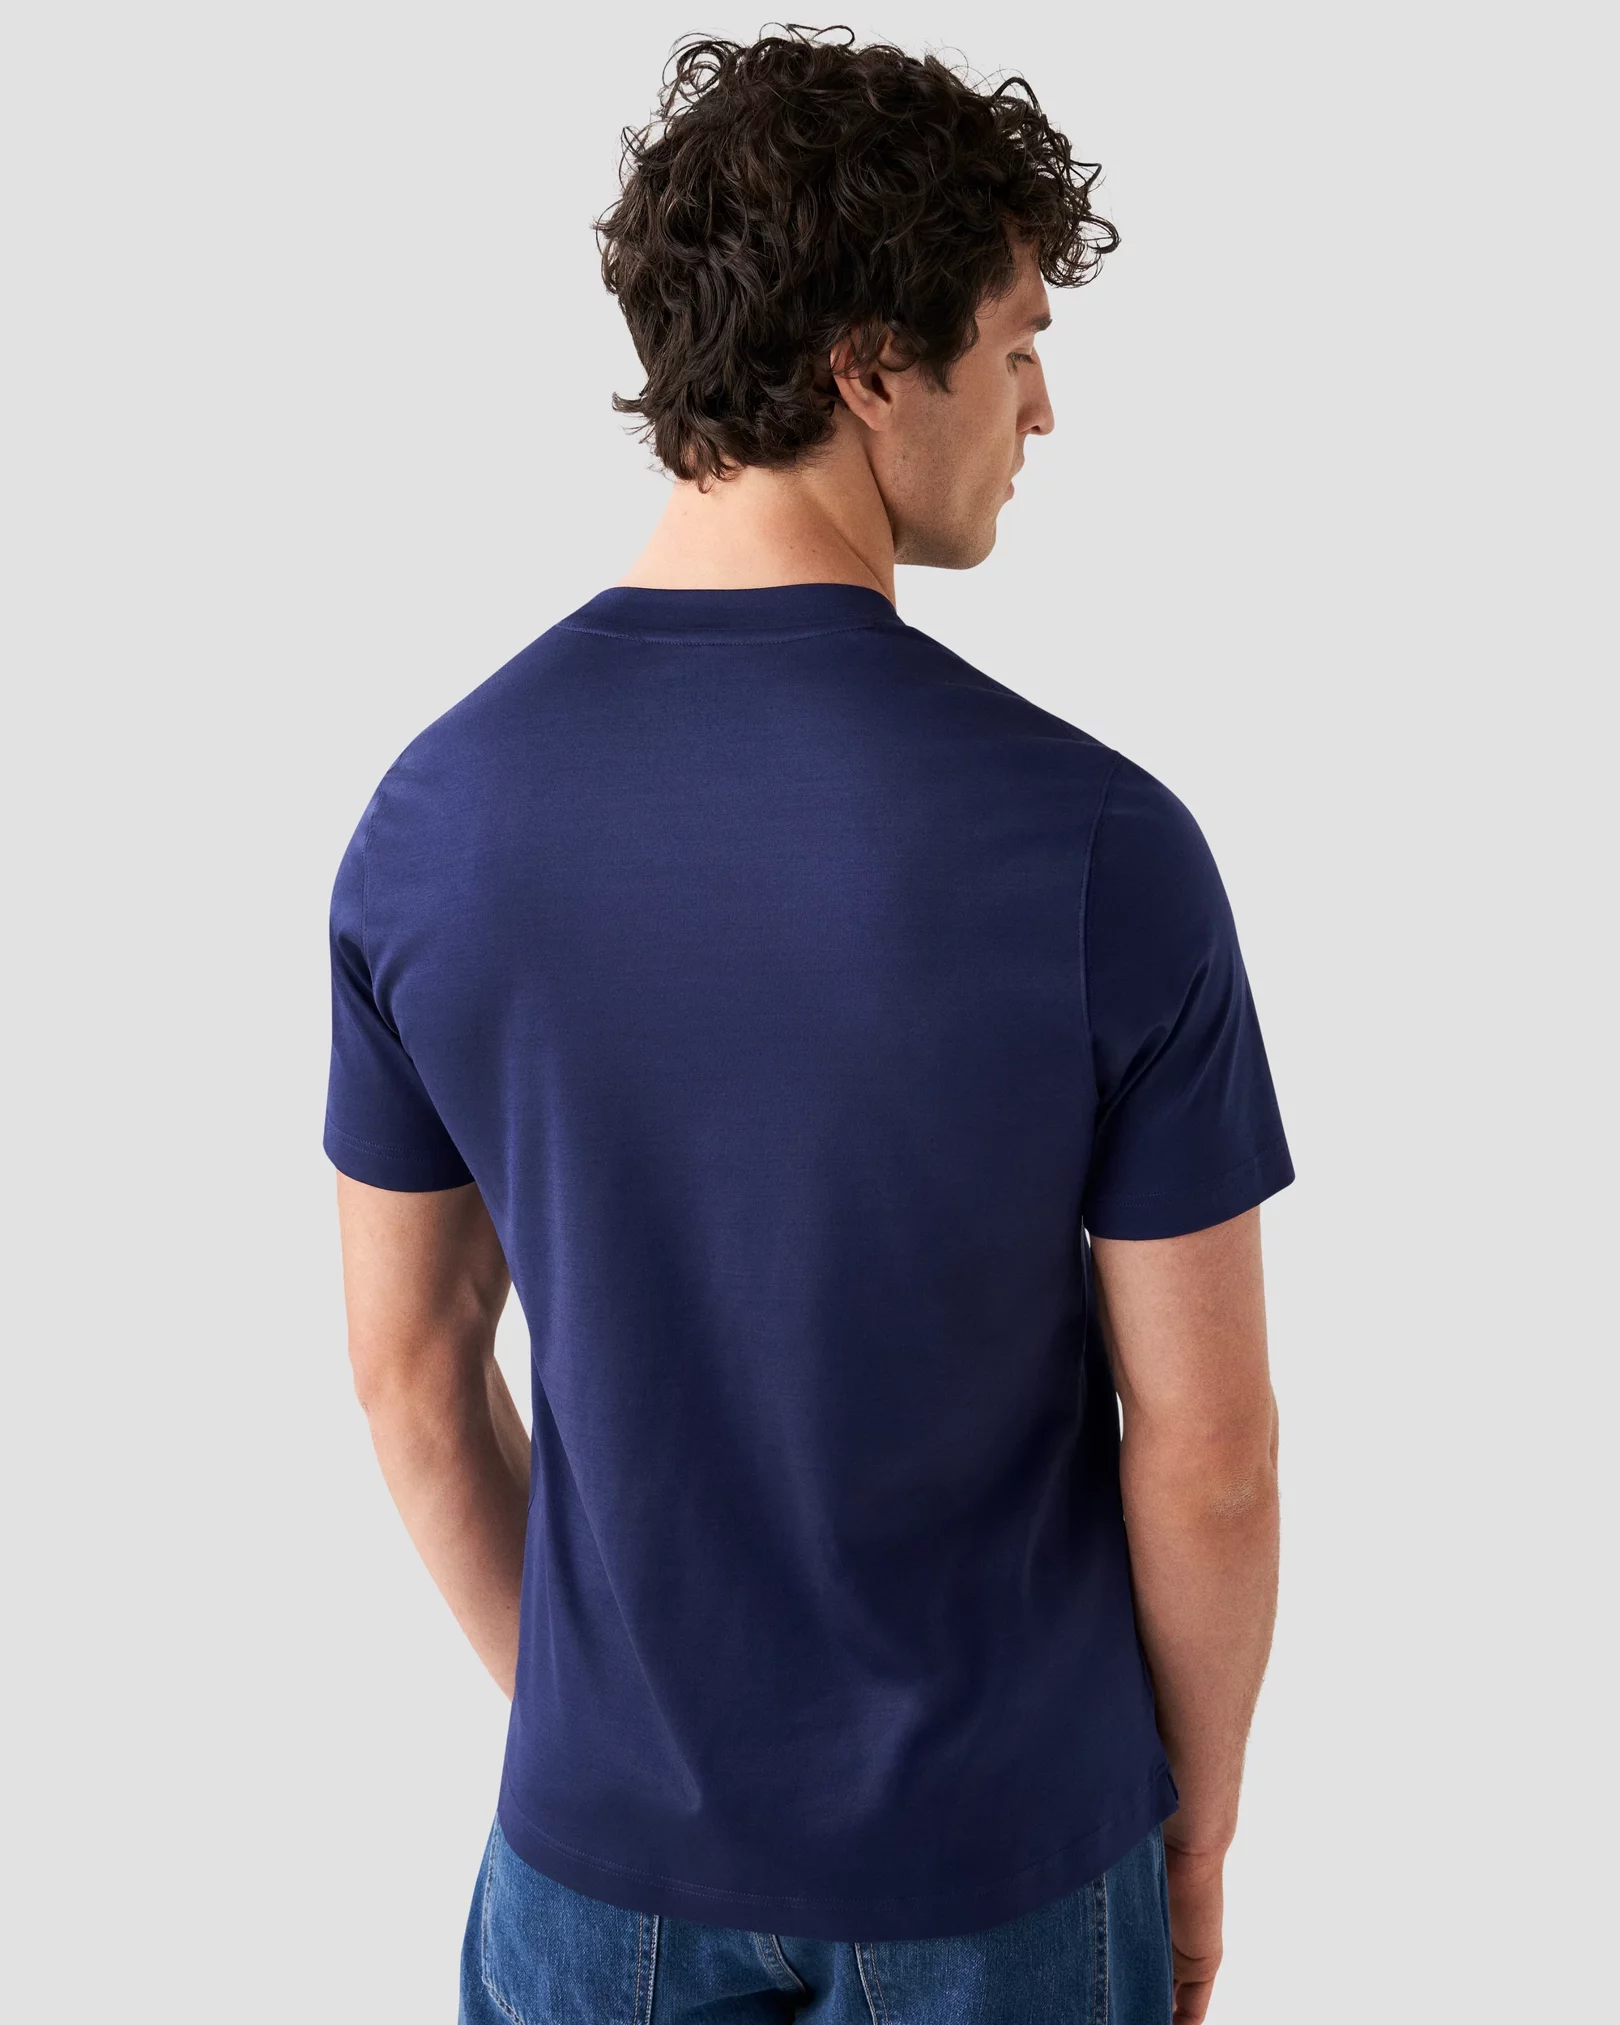 Eton - dark blue filo di scozia t shirt